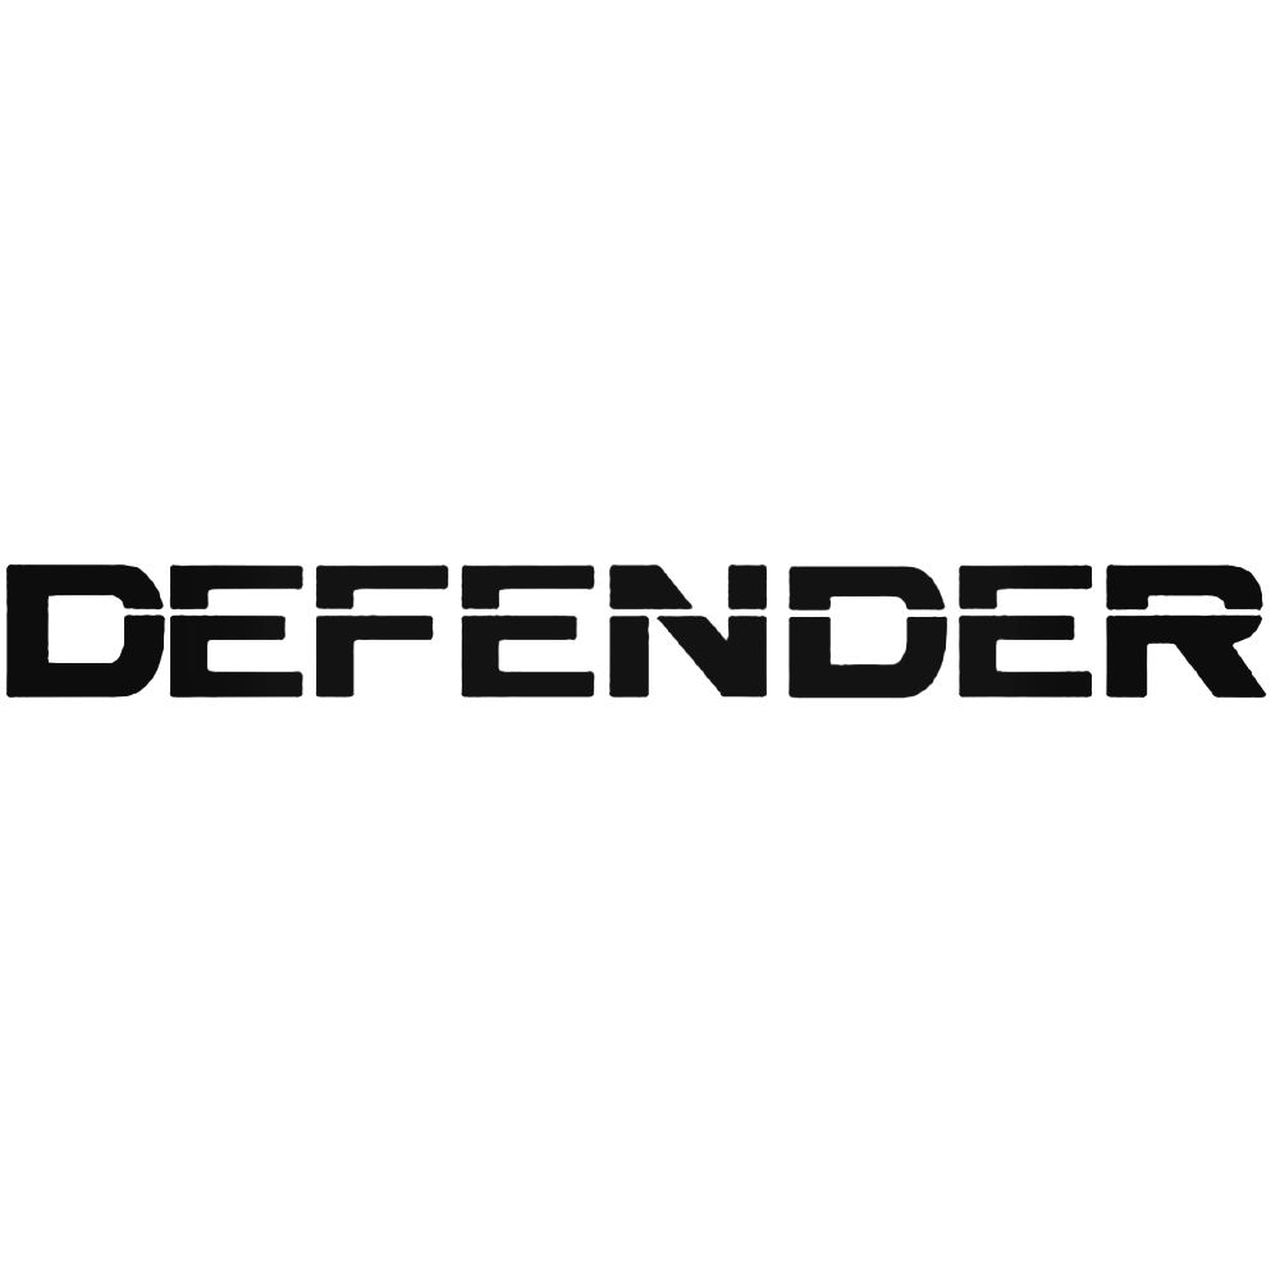 Www defender. Defender надпись. Дефендер лого. Defender Land Rover логотип вектор. Картриджи Defender логотип.